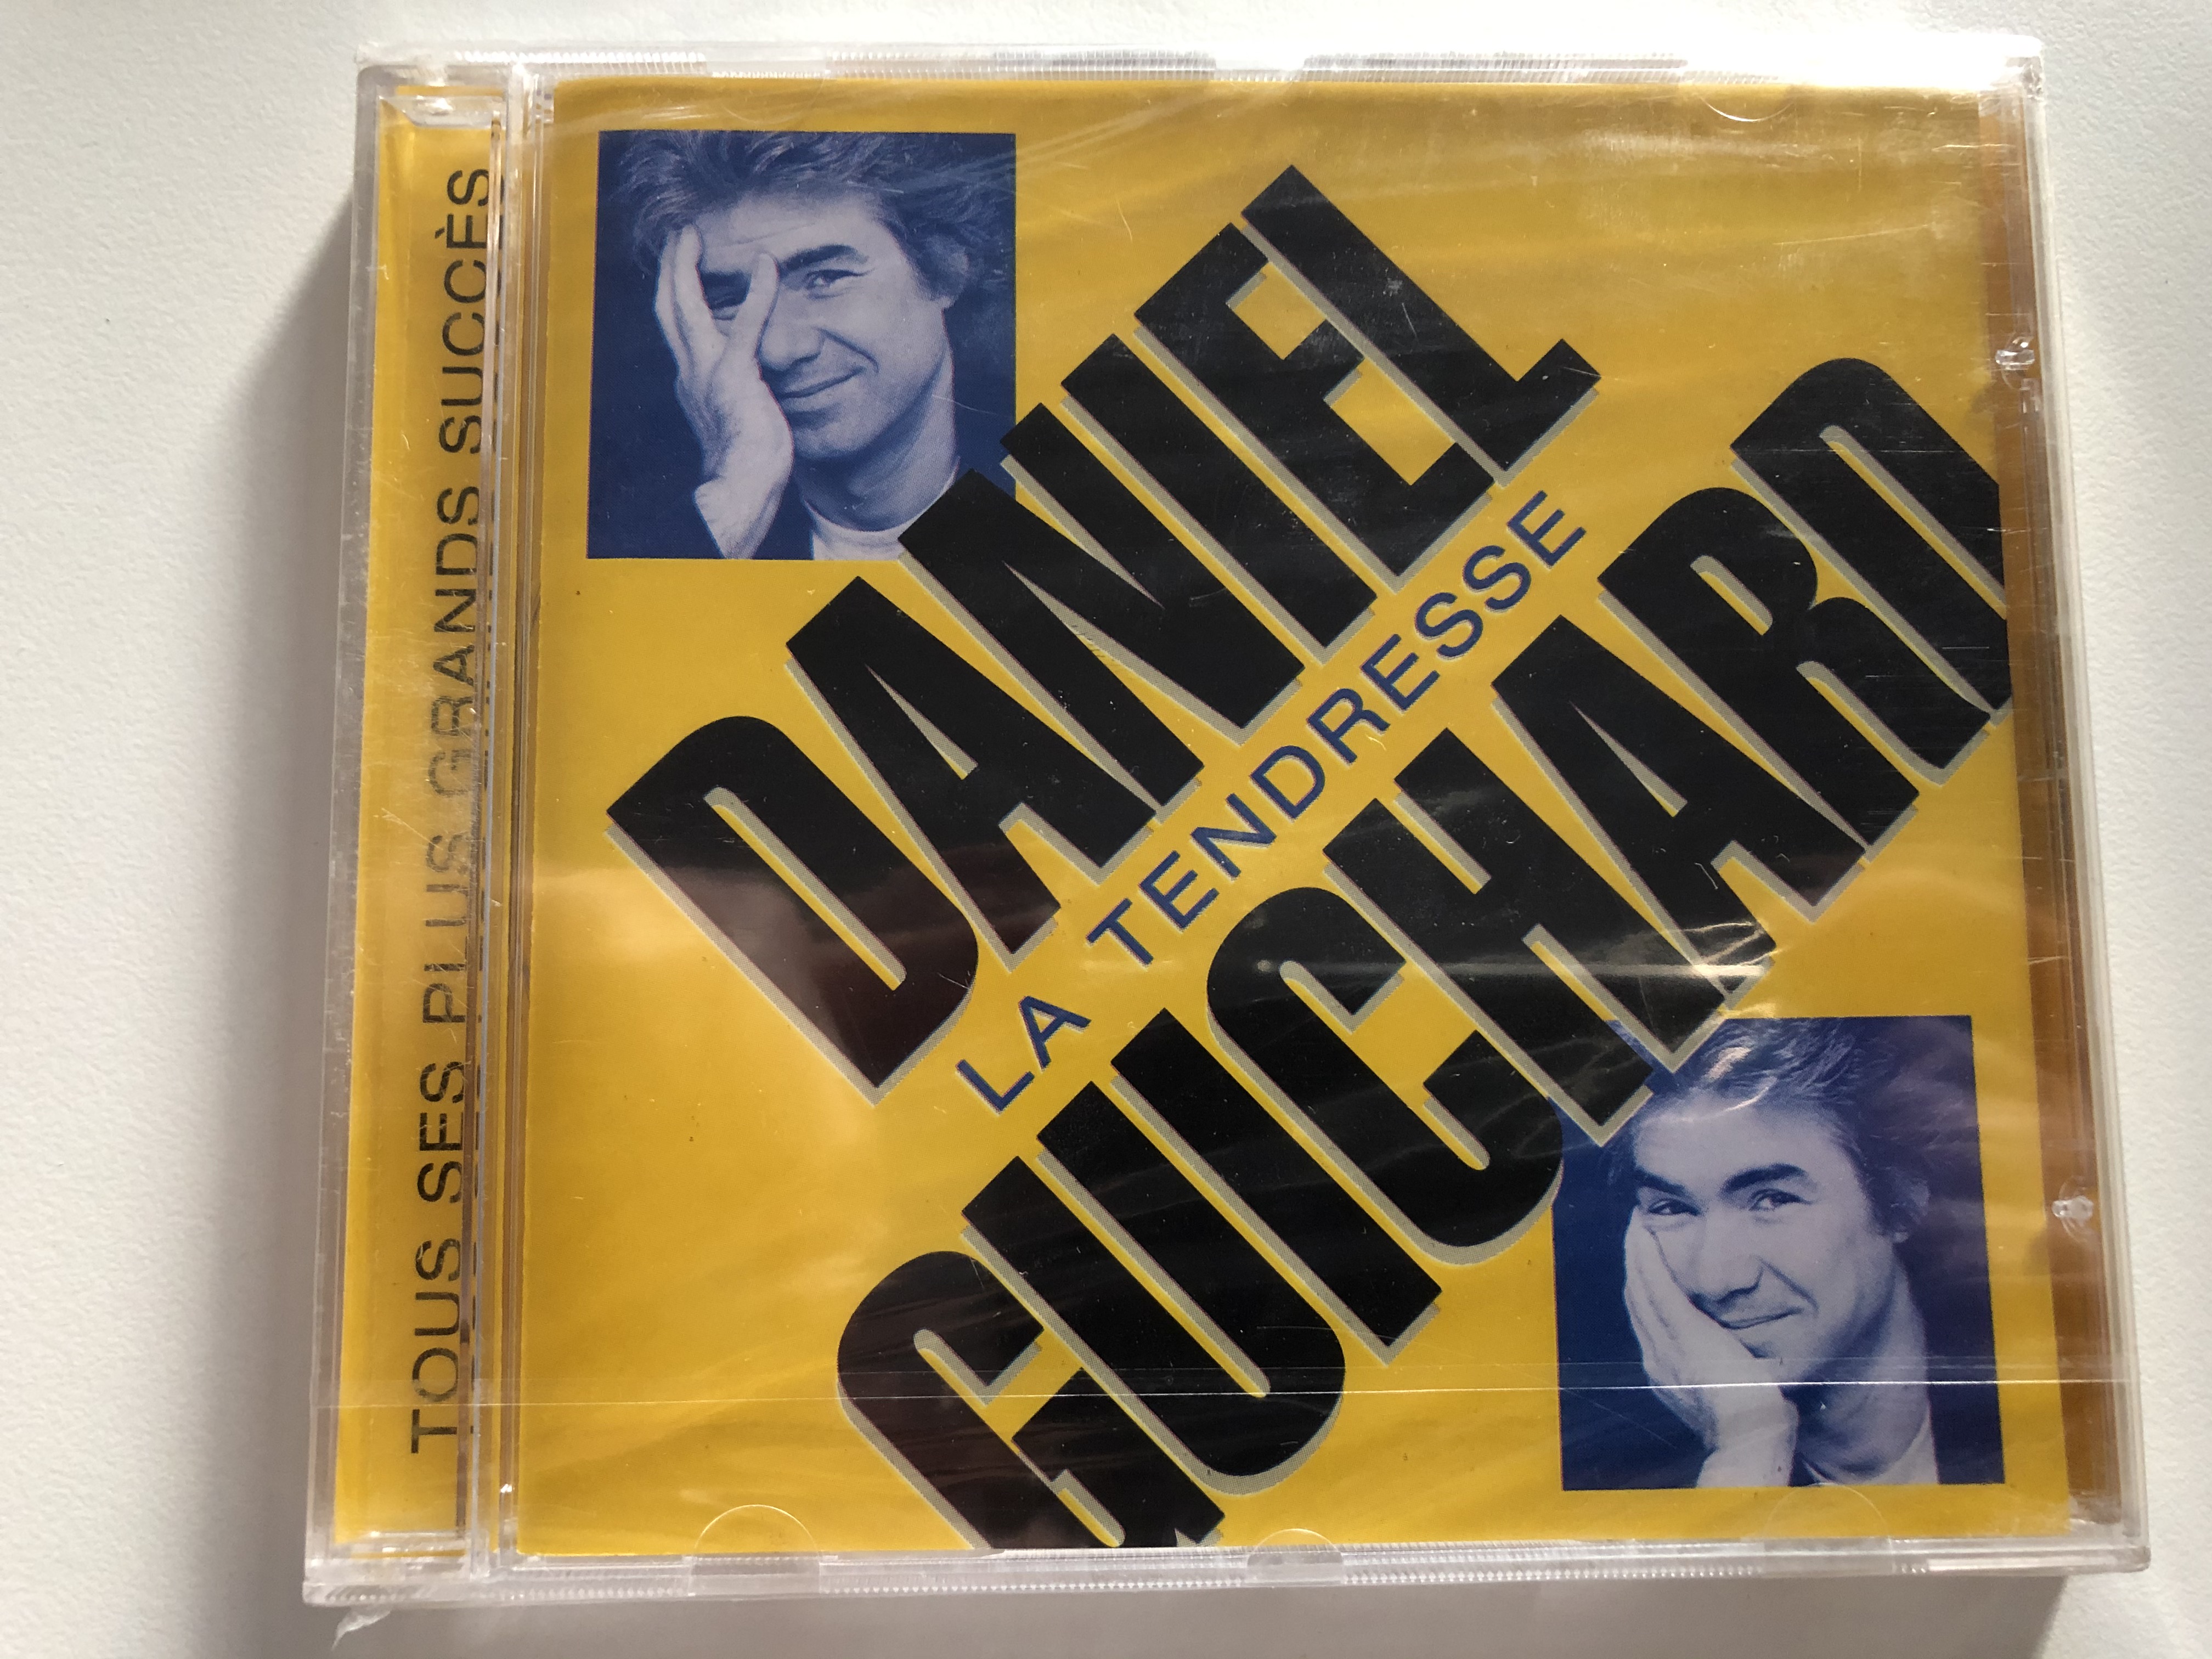 daniel-guichard-la-tendresse-disques-dreyfus-audio-cd-1996-fdm-36127-2-1-.jpg